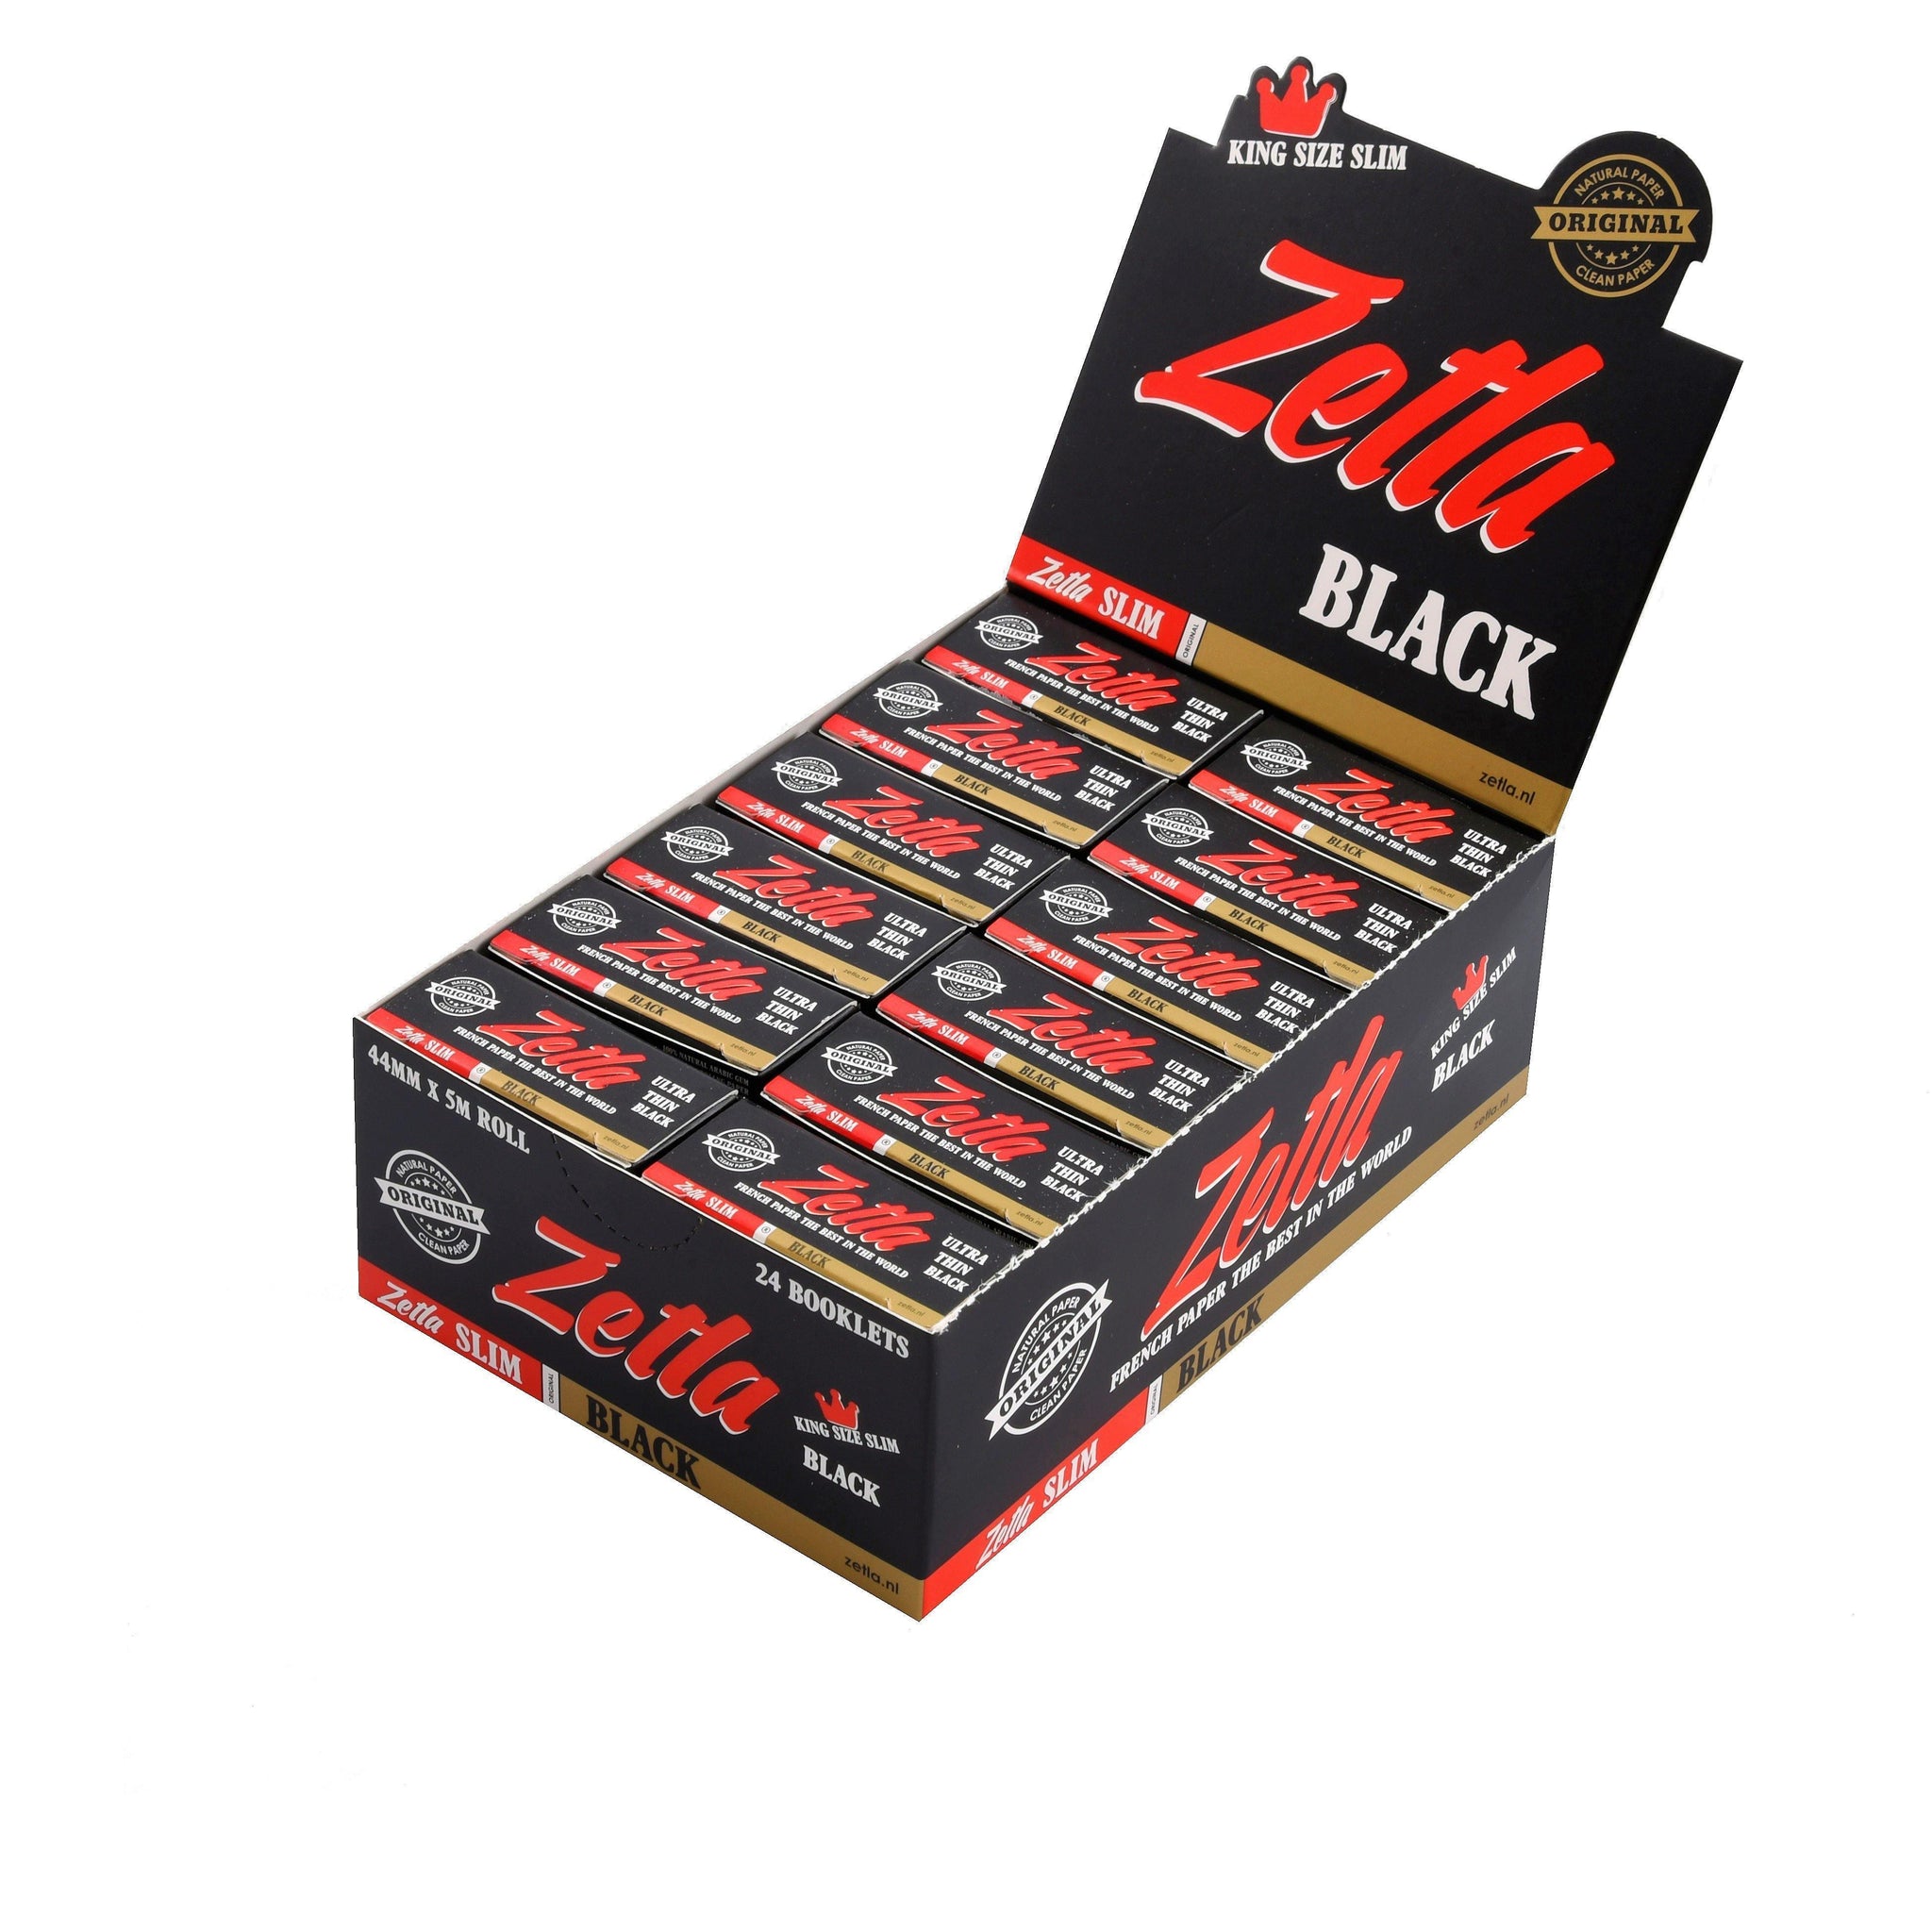 Zetla Rolling Papers Black Rolls K/S Slim - ABK Usa